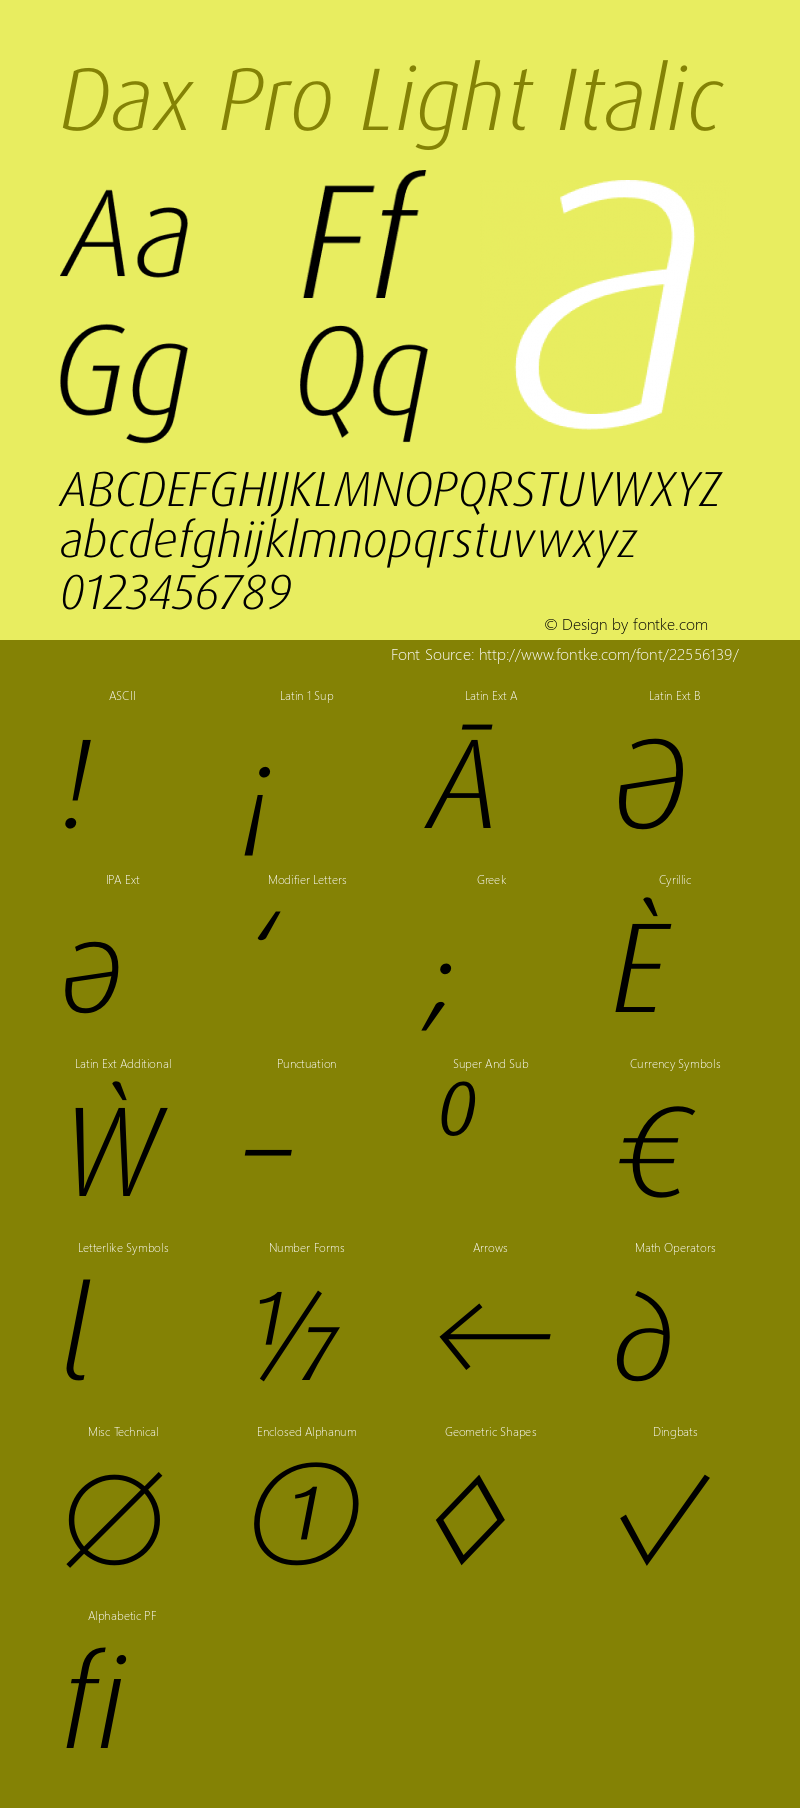 Dax Pro Light Italic Version 7.504 Font Sample